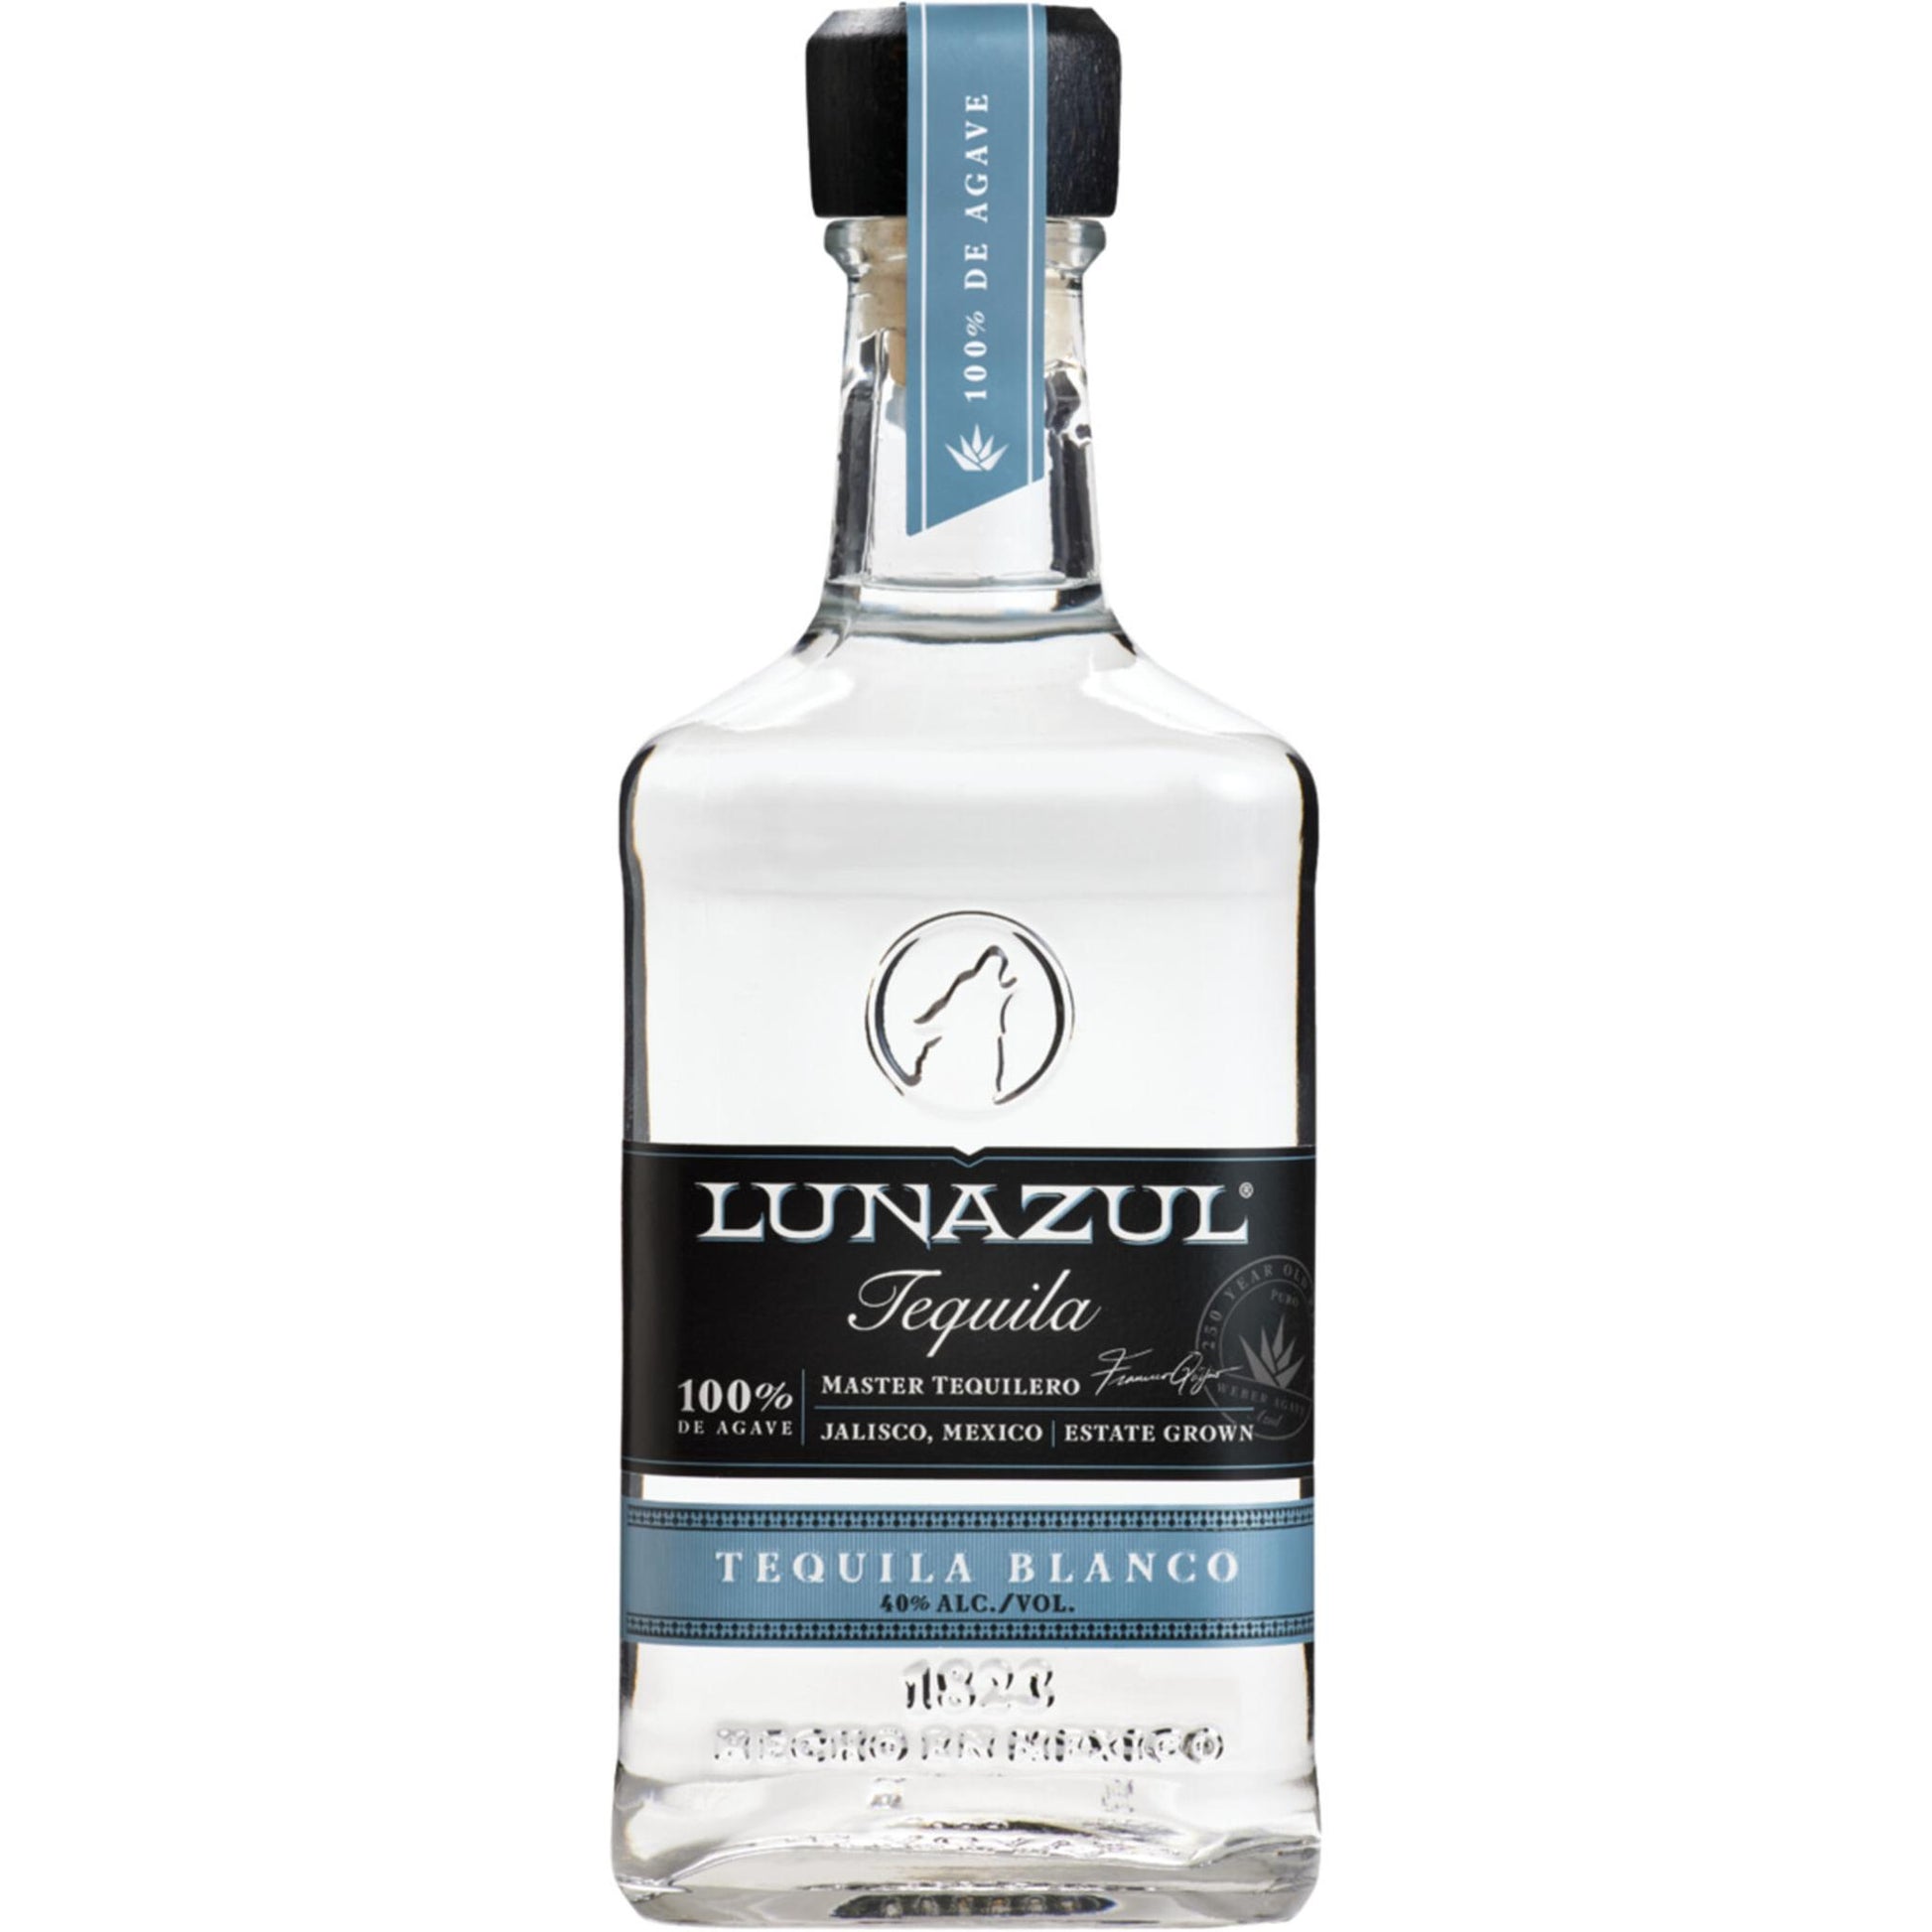 Lunazul Tequila Blanco - Liquor Geeks